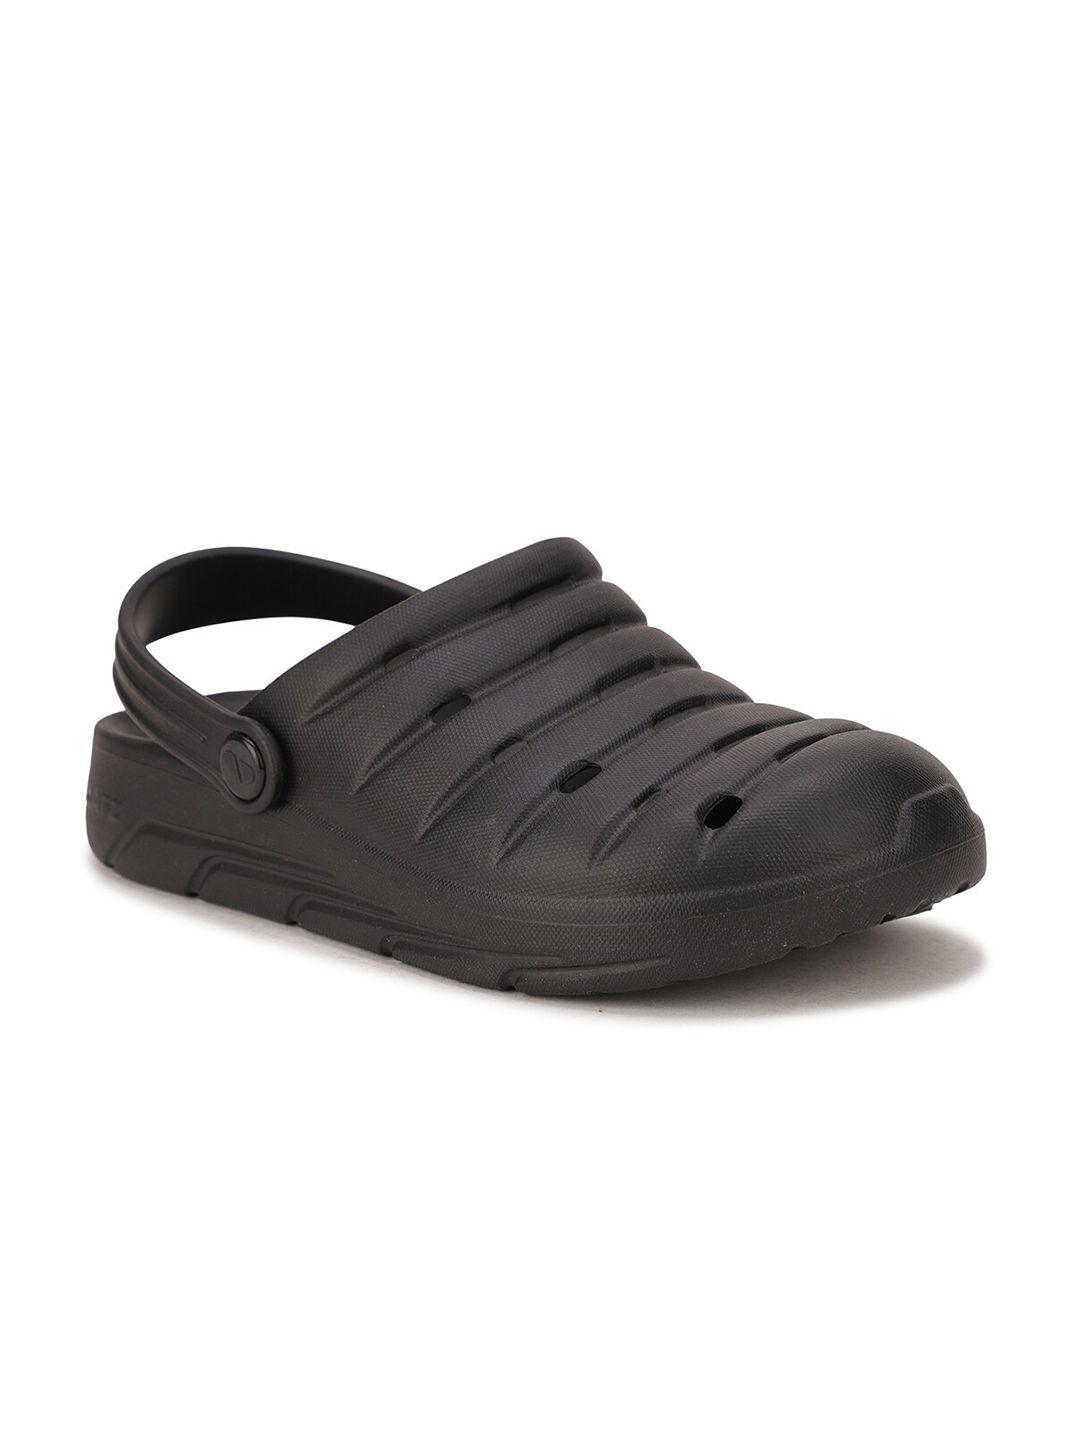 bata boys black clogs sandals